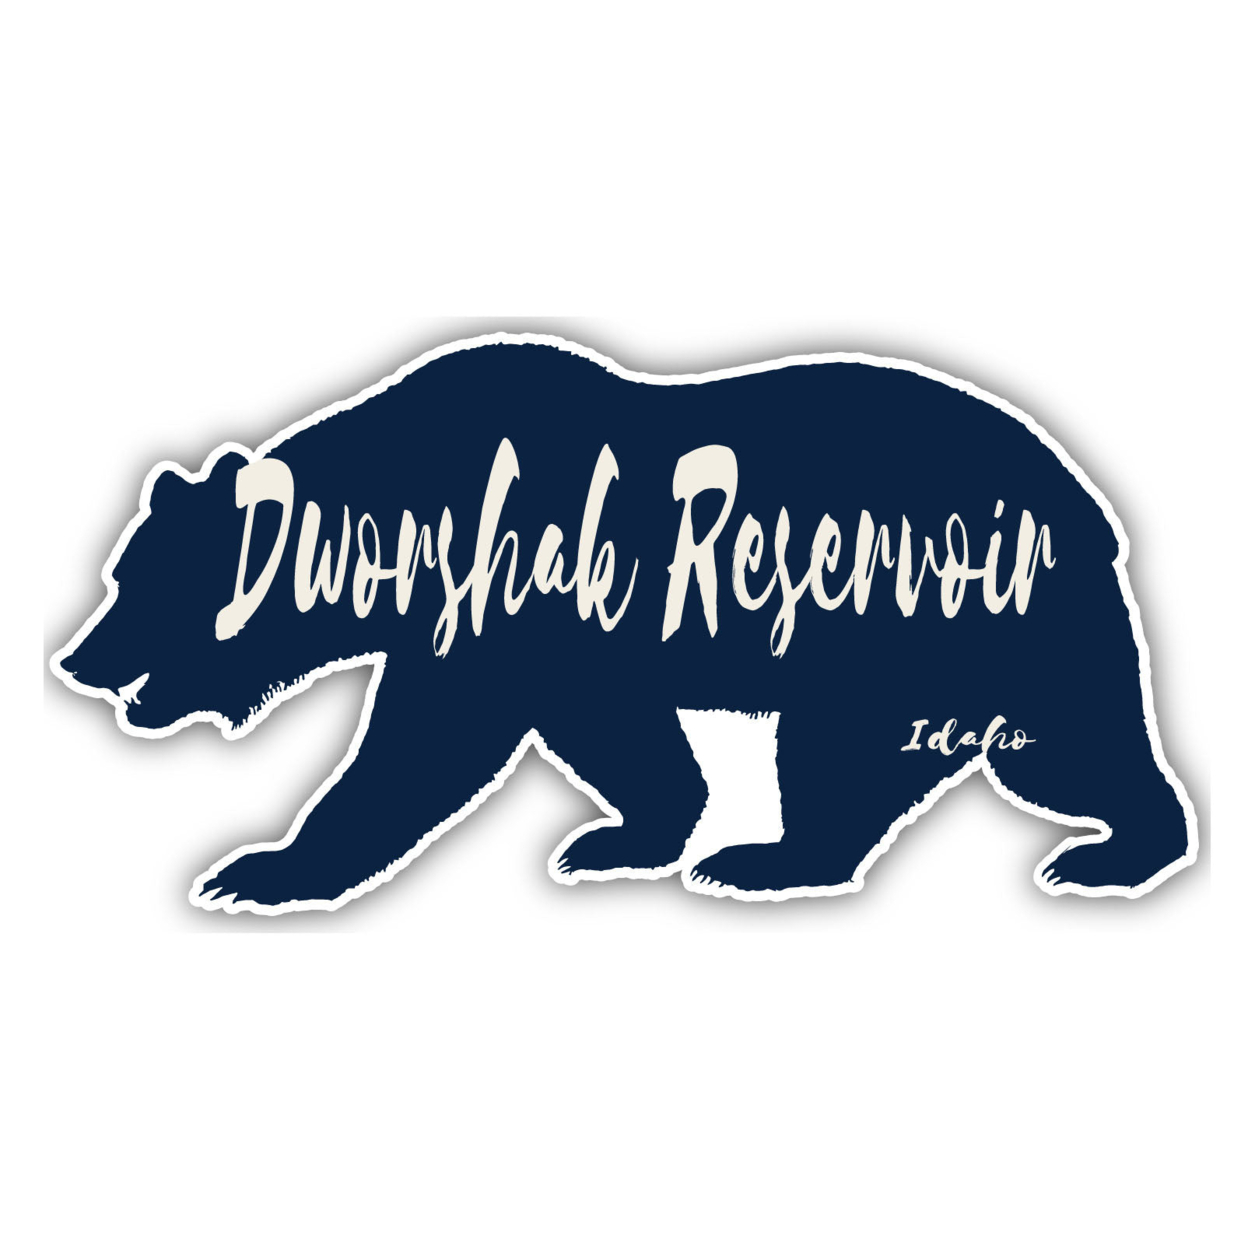 Dworshak Reservoir Idaho Souvenir Decorative Stickers (Choose Theme And Size) - 4-Pack, 12-Inch, Tent